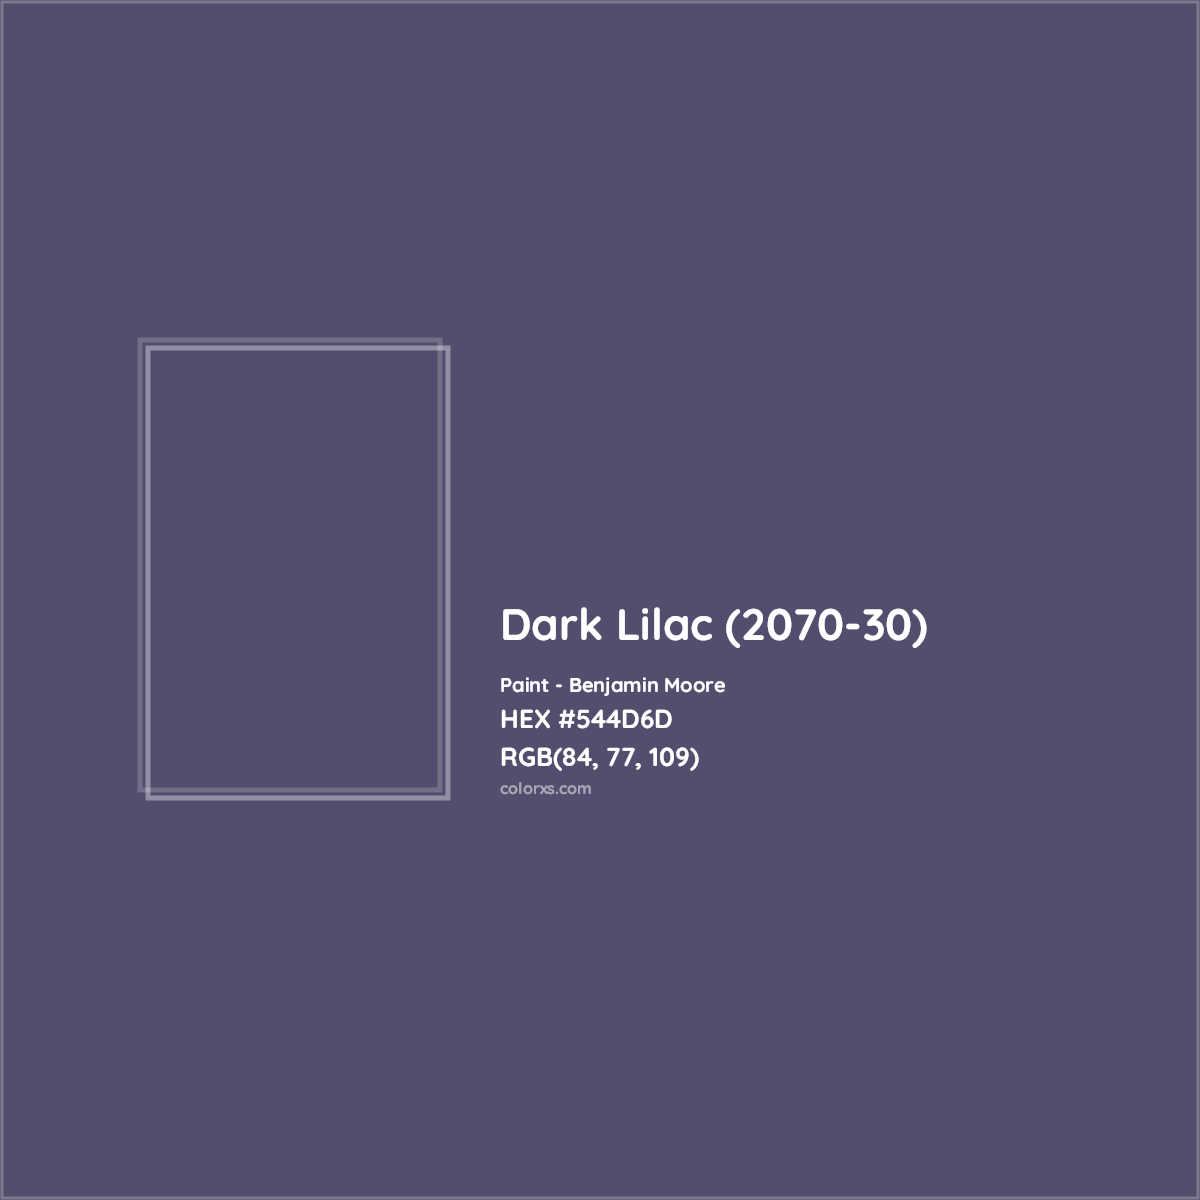 HEX #544D6D Dark Lilac (2070-30) Paint Benjamin Moore - Color Code